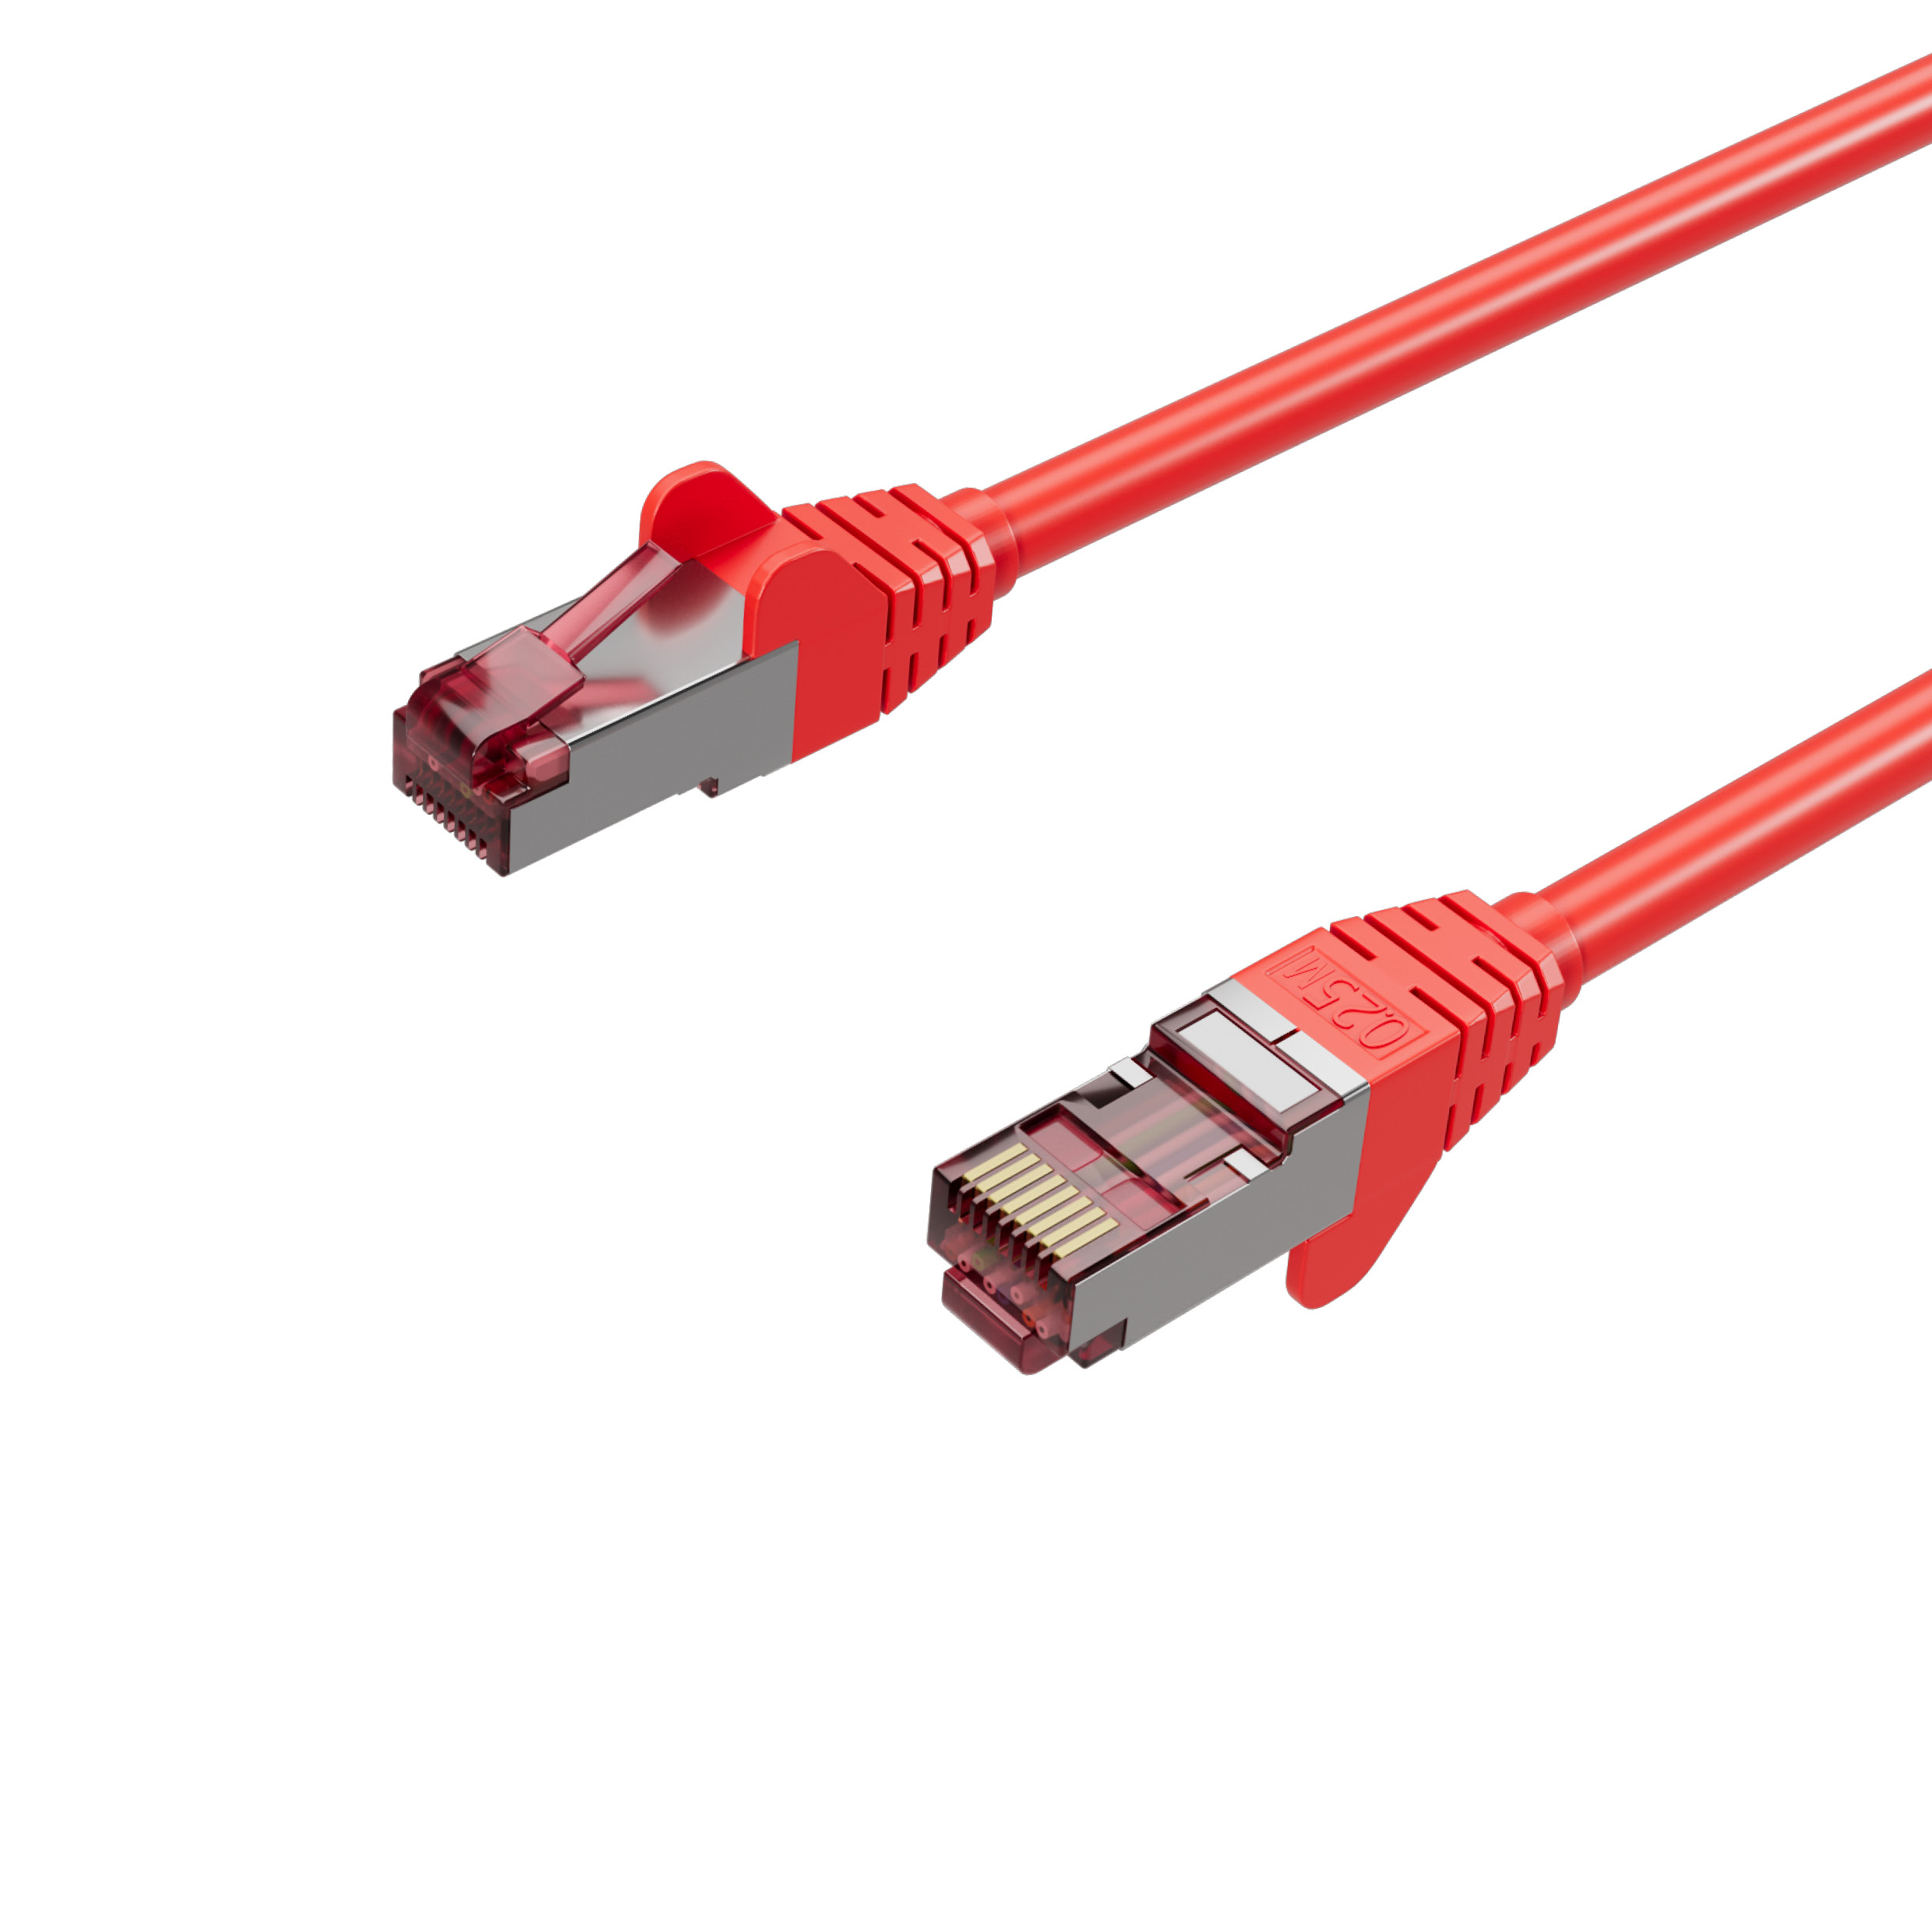 KABELBUDE Netzwerkkabel, RJ45 LAN, S/FTP, 6A, RJ45, 1 Rot Halogenfrei, PIMF, Cat m Patchkabel Ethernet 1,00m, GHMT